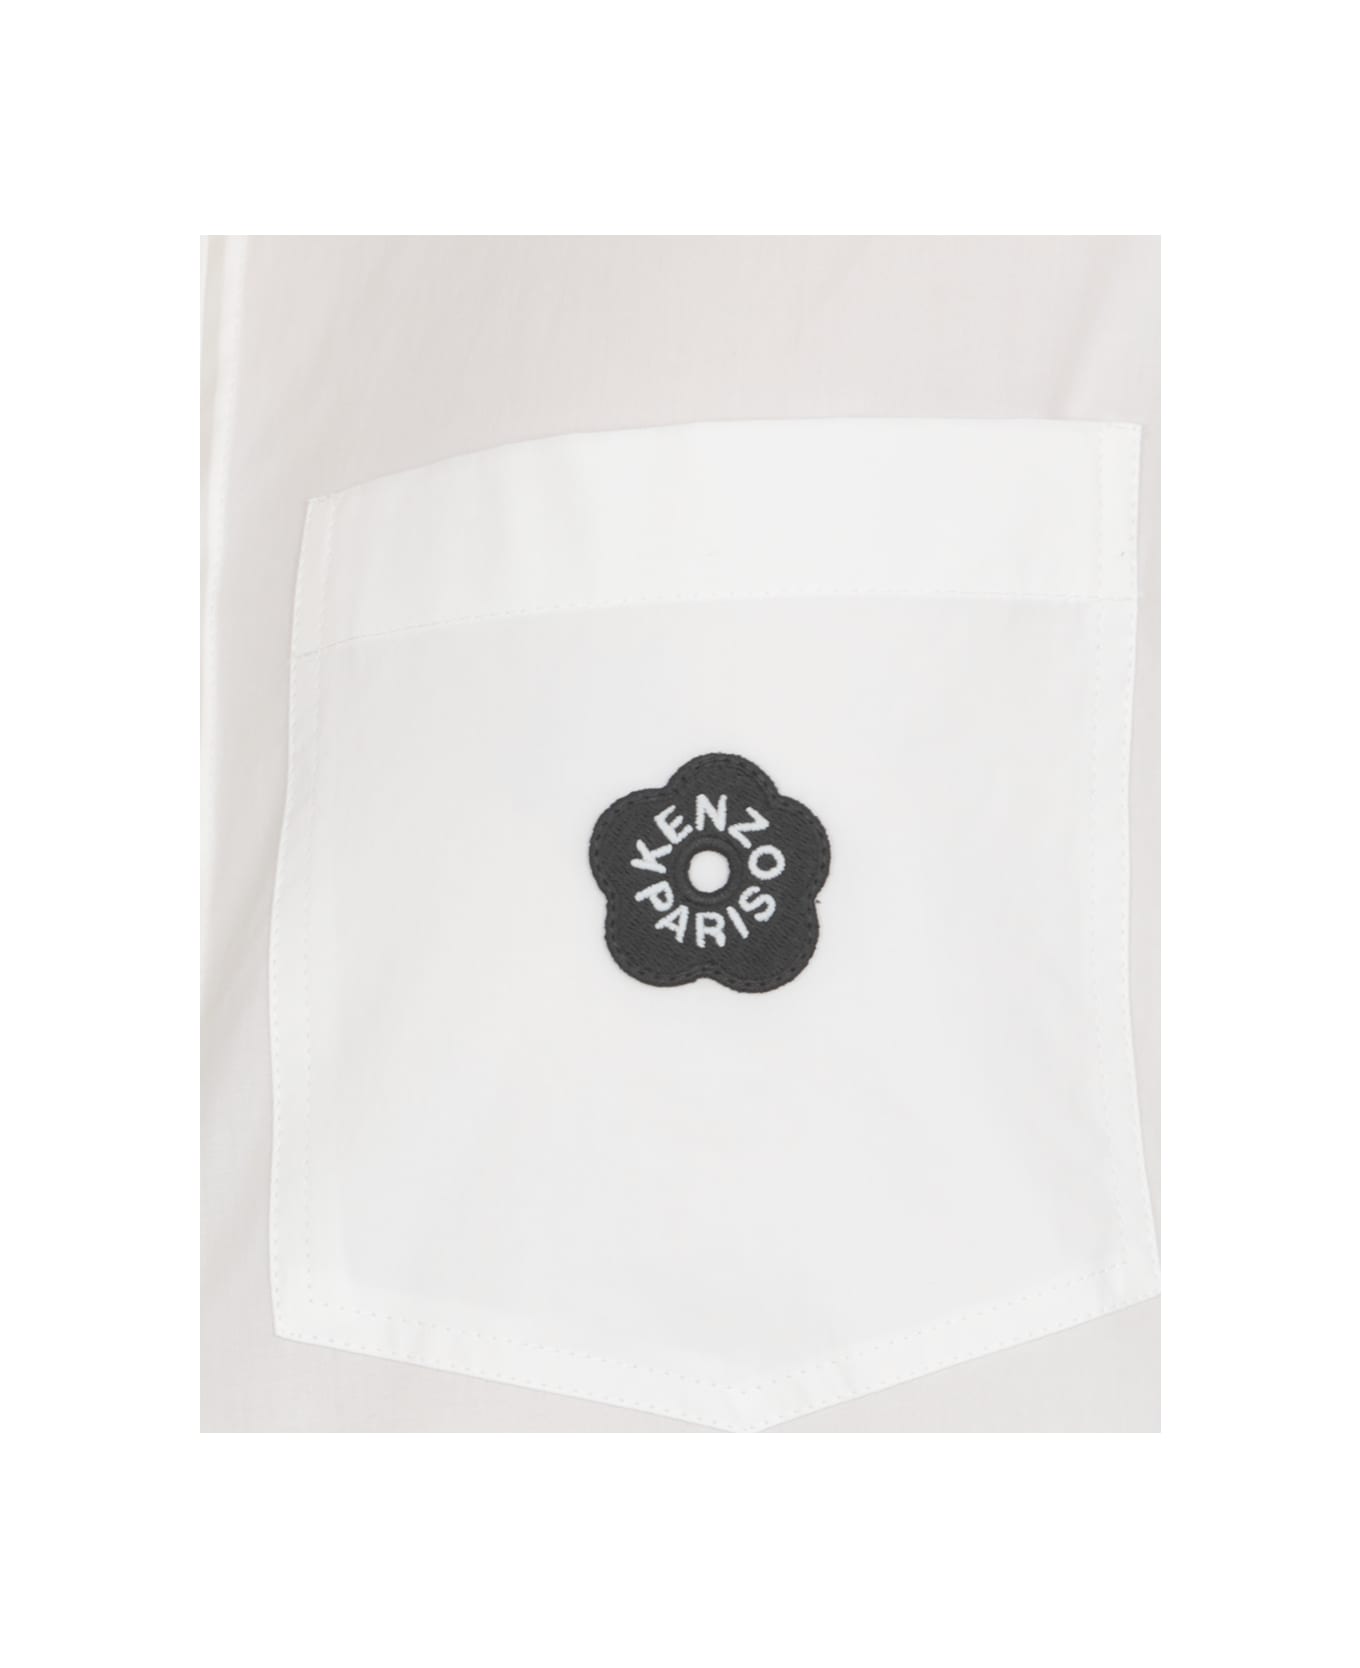 Kenzo Boke 2.0 Cropped Shirt - White